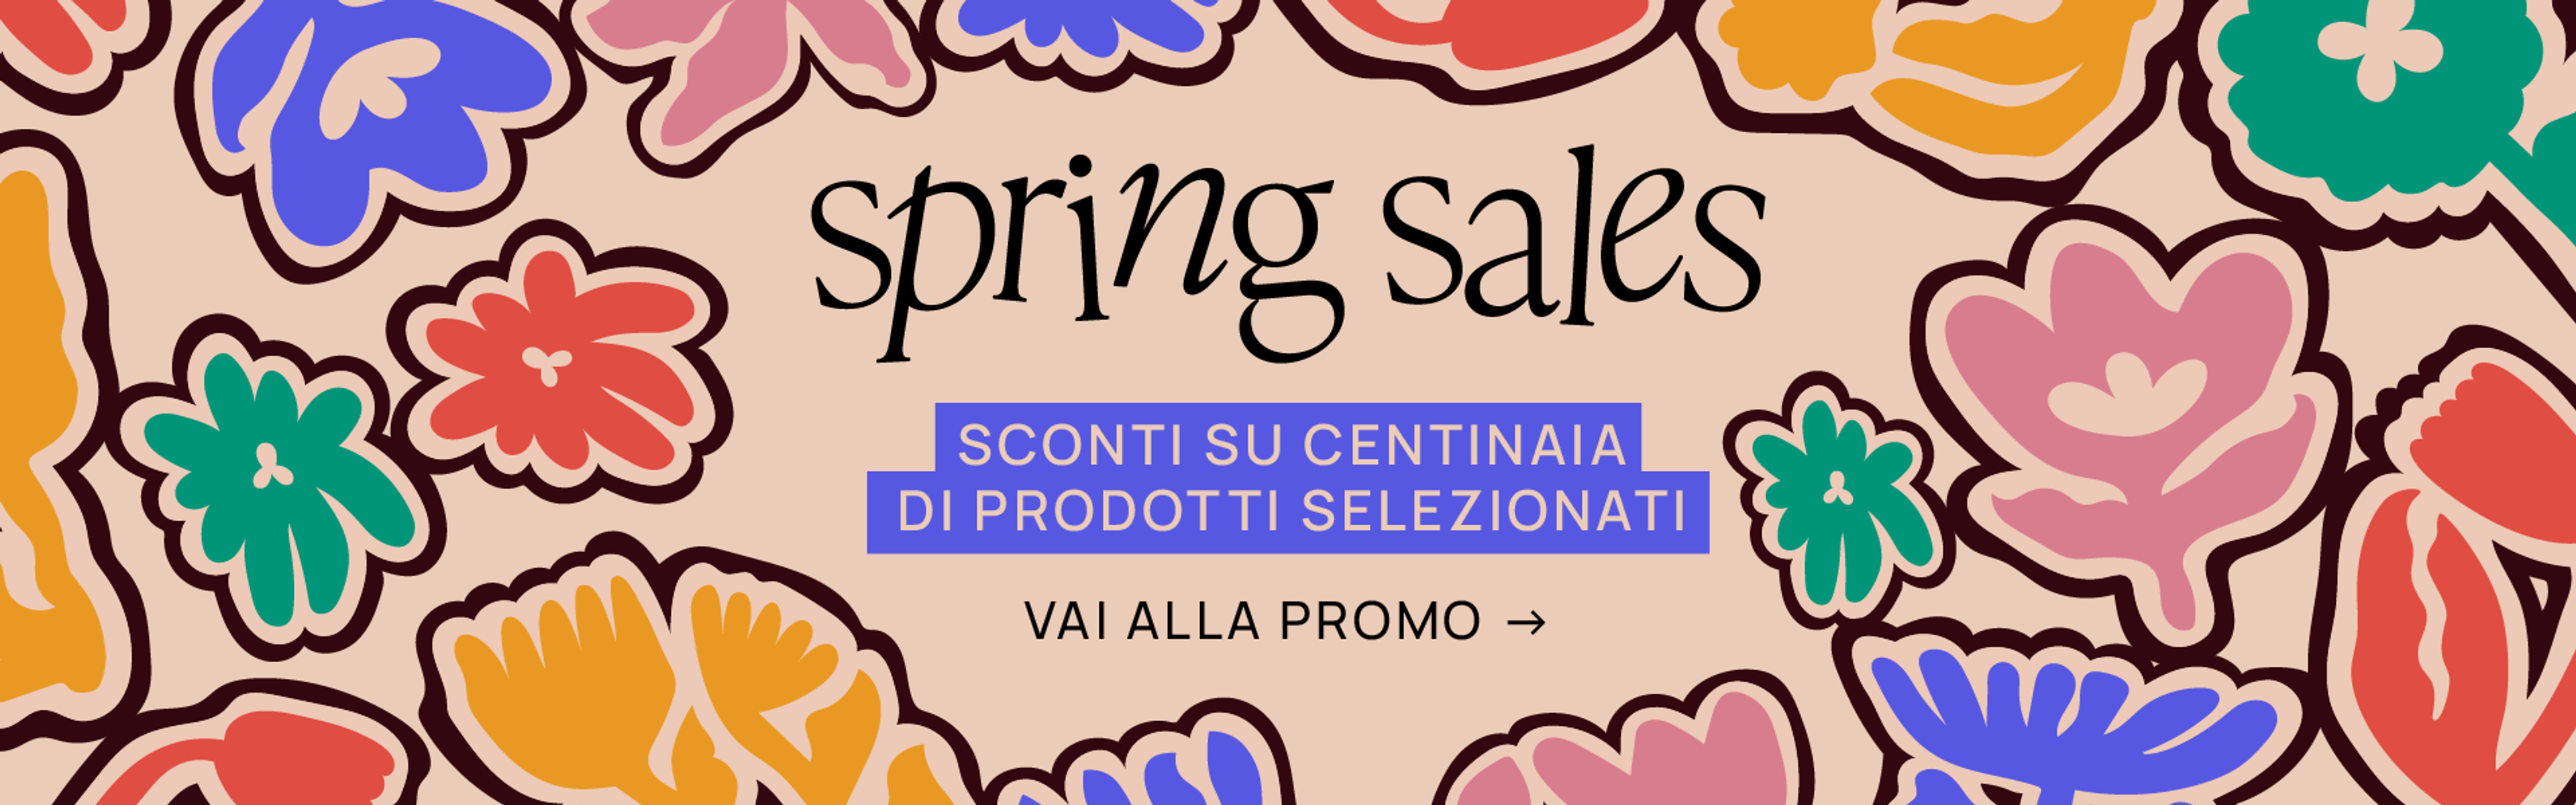 Spring Sales Promo Primavera